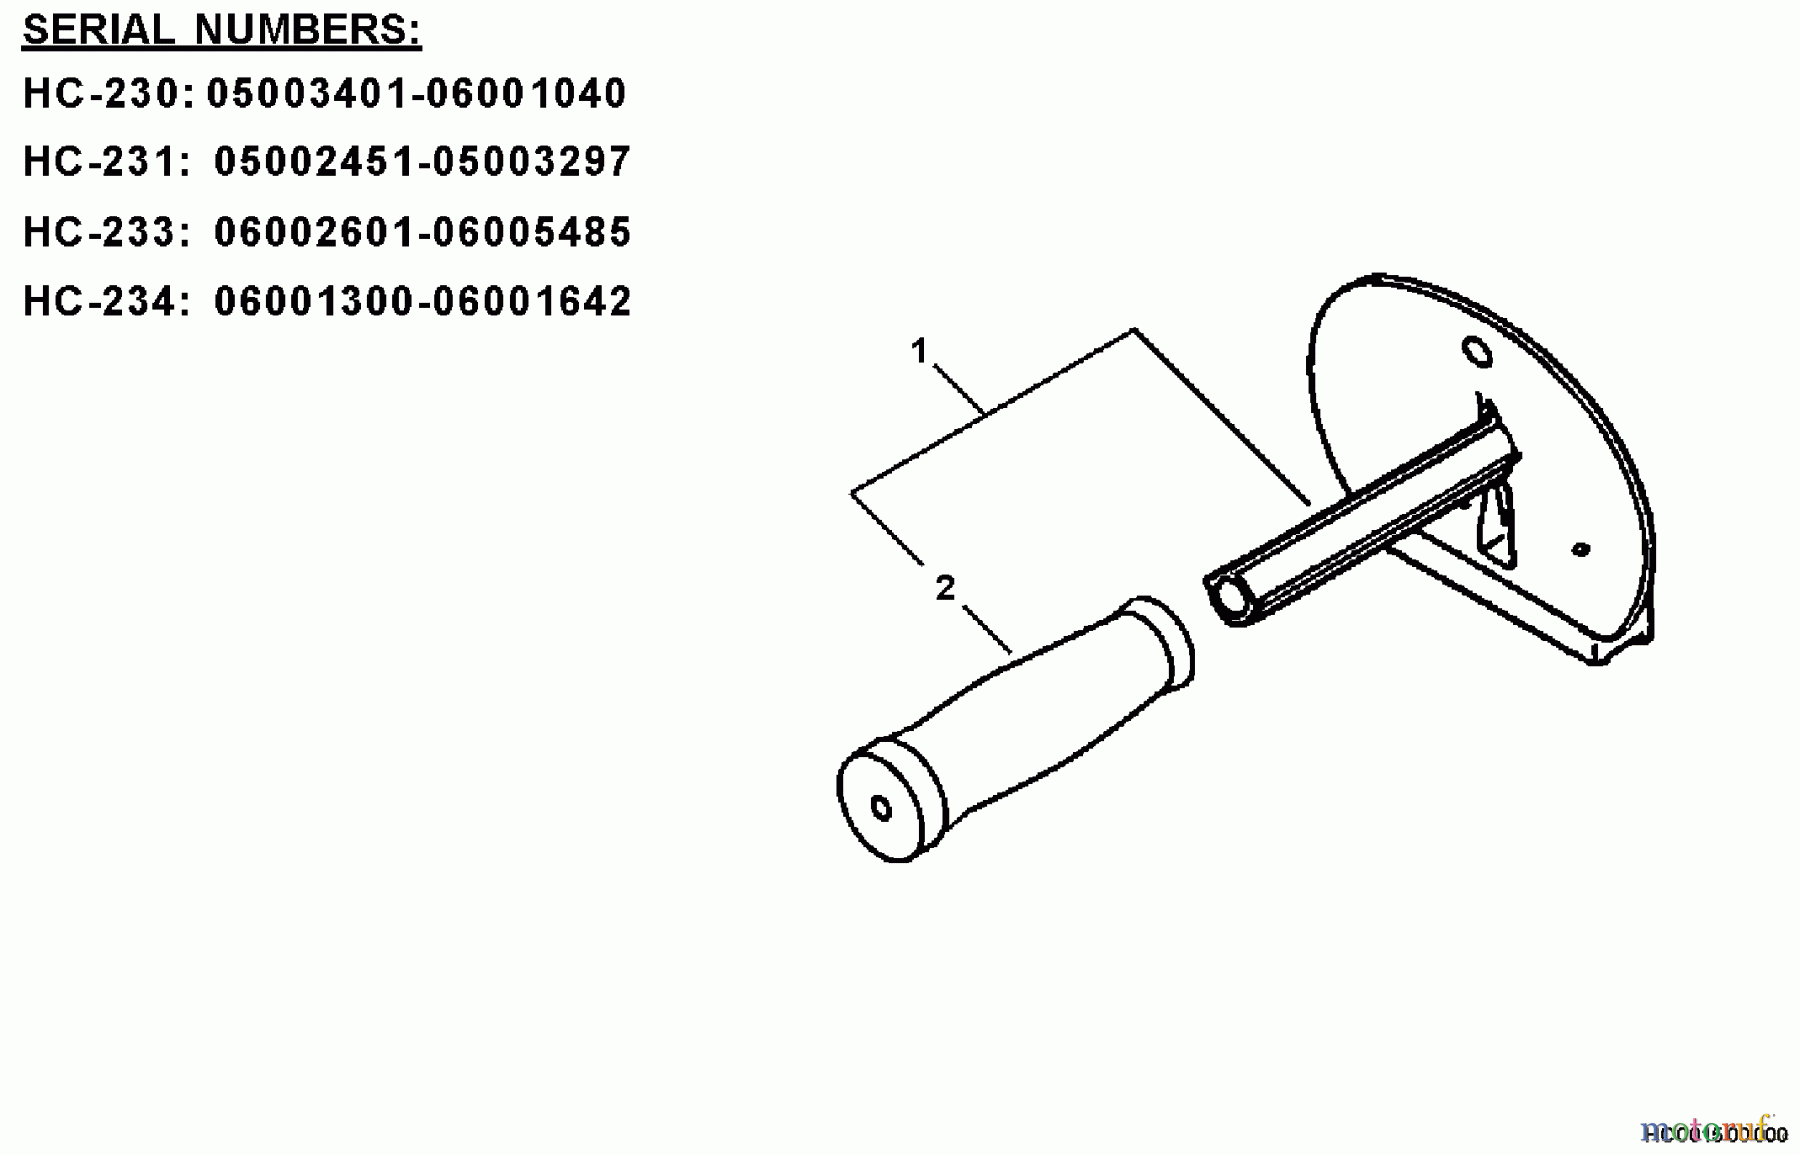  Echo Heckenscheren HC-230 - Echo Hedge Trimmer, S/N: 05001001 - 05999999 Side Handle  S/N: 05003401-05999999